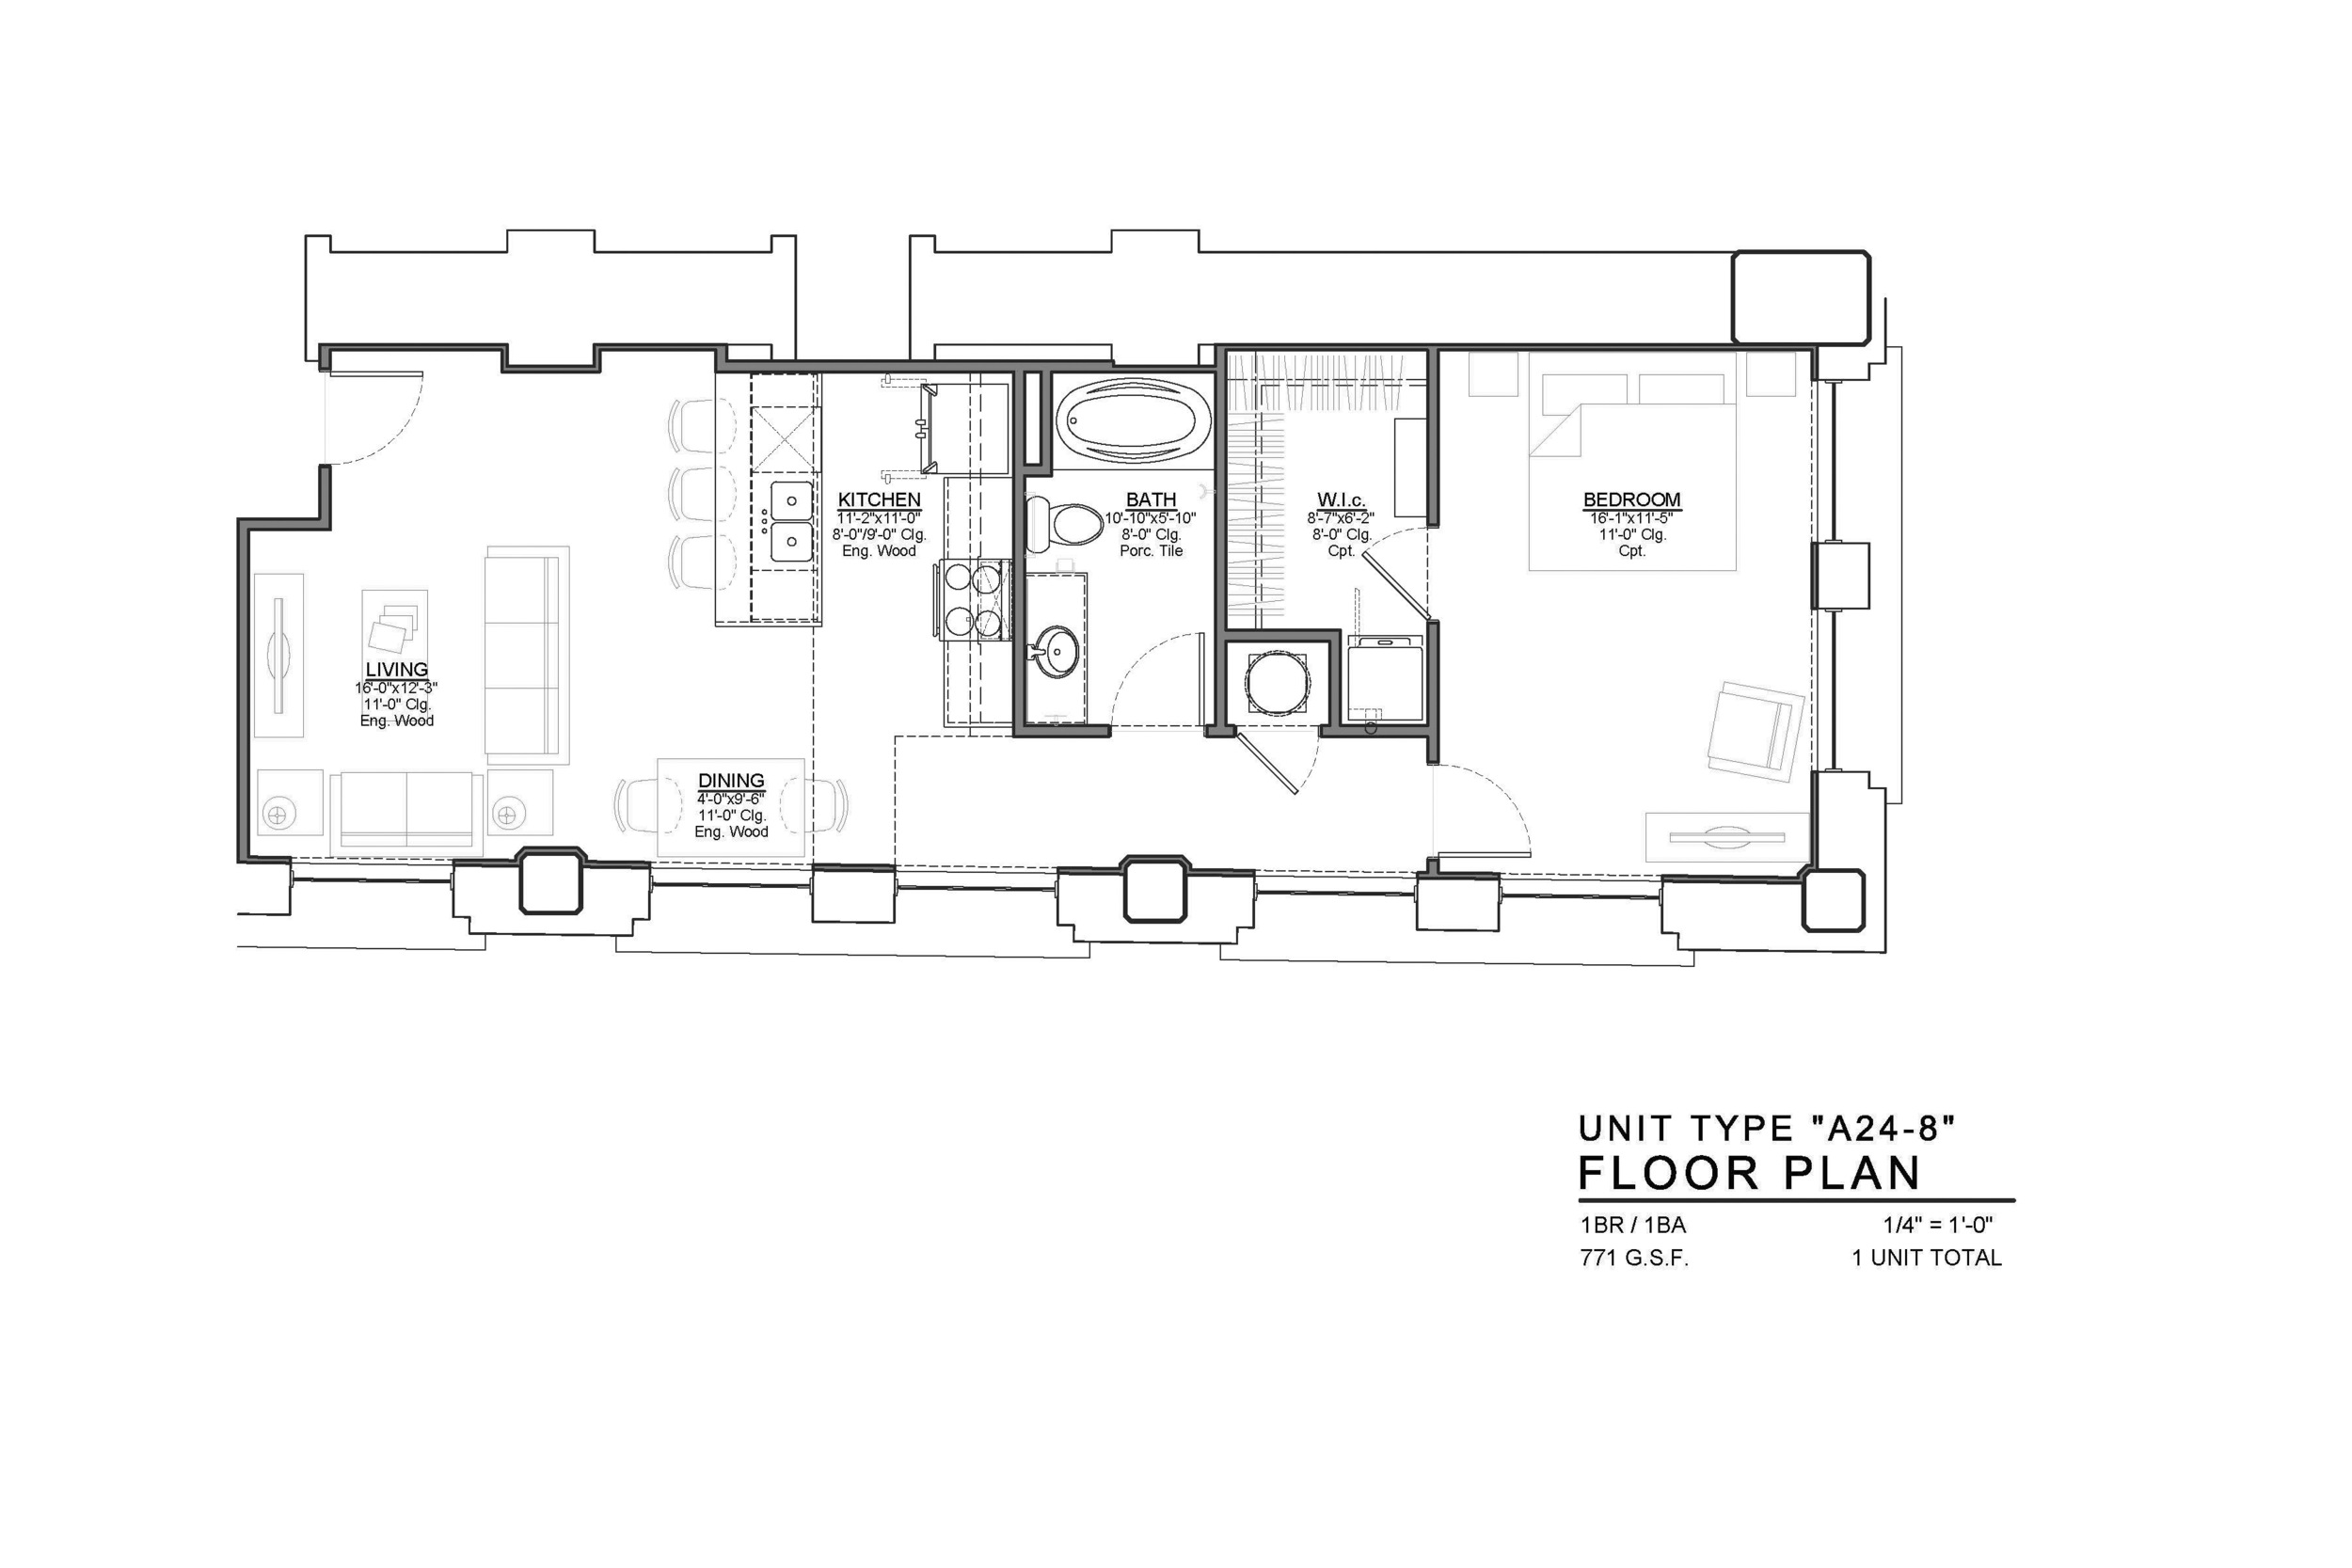 A24-8 FLOOR PLAN: 1 BEDROOM / 1 BATH